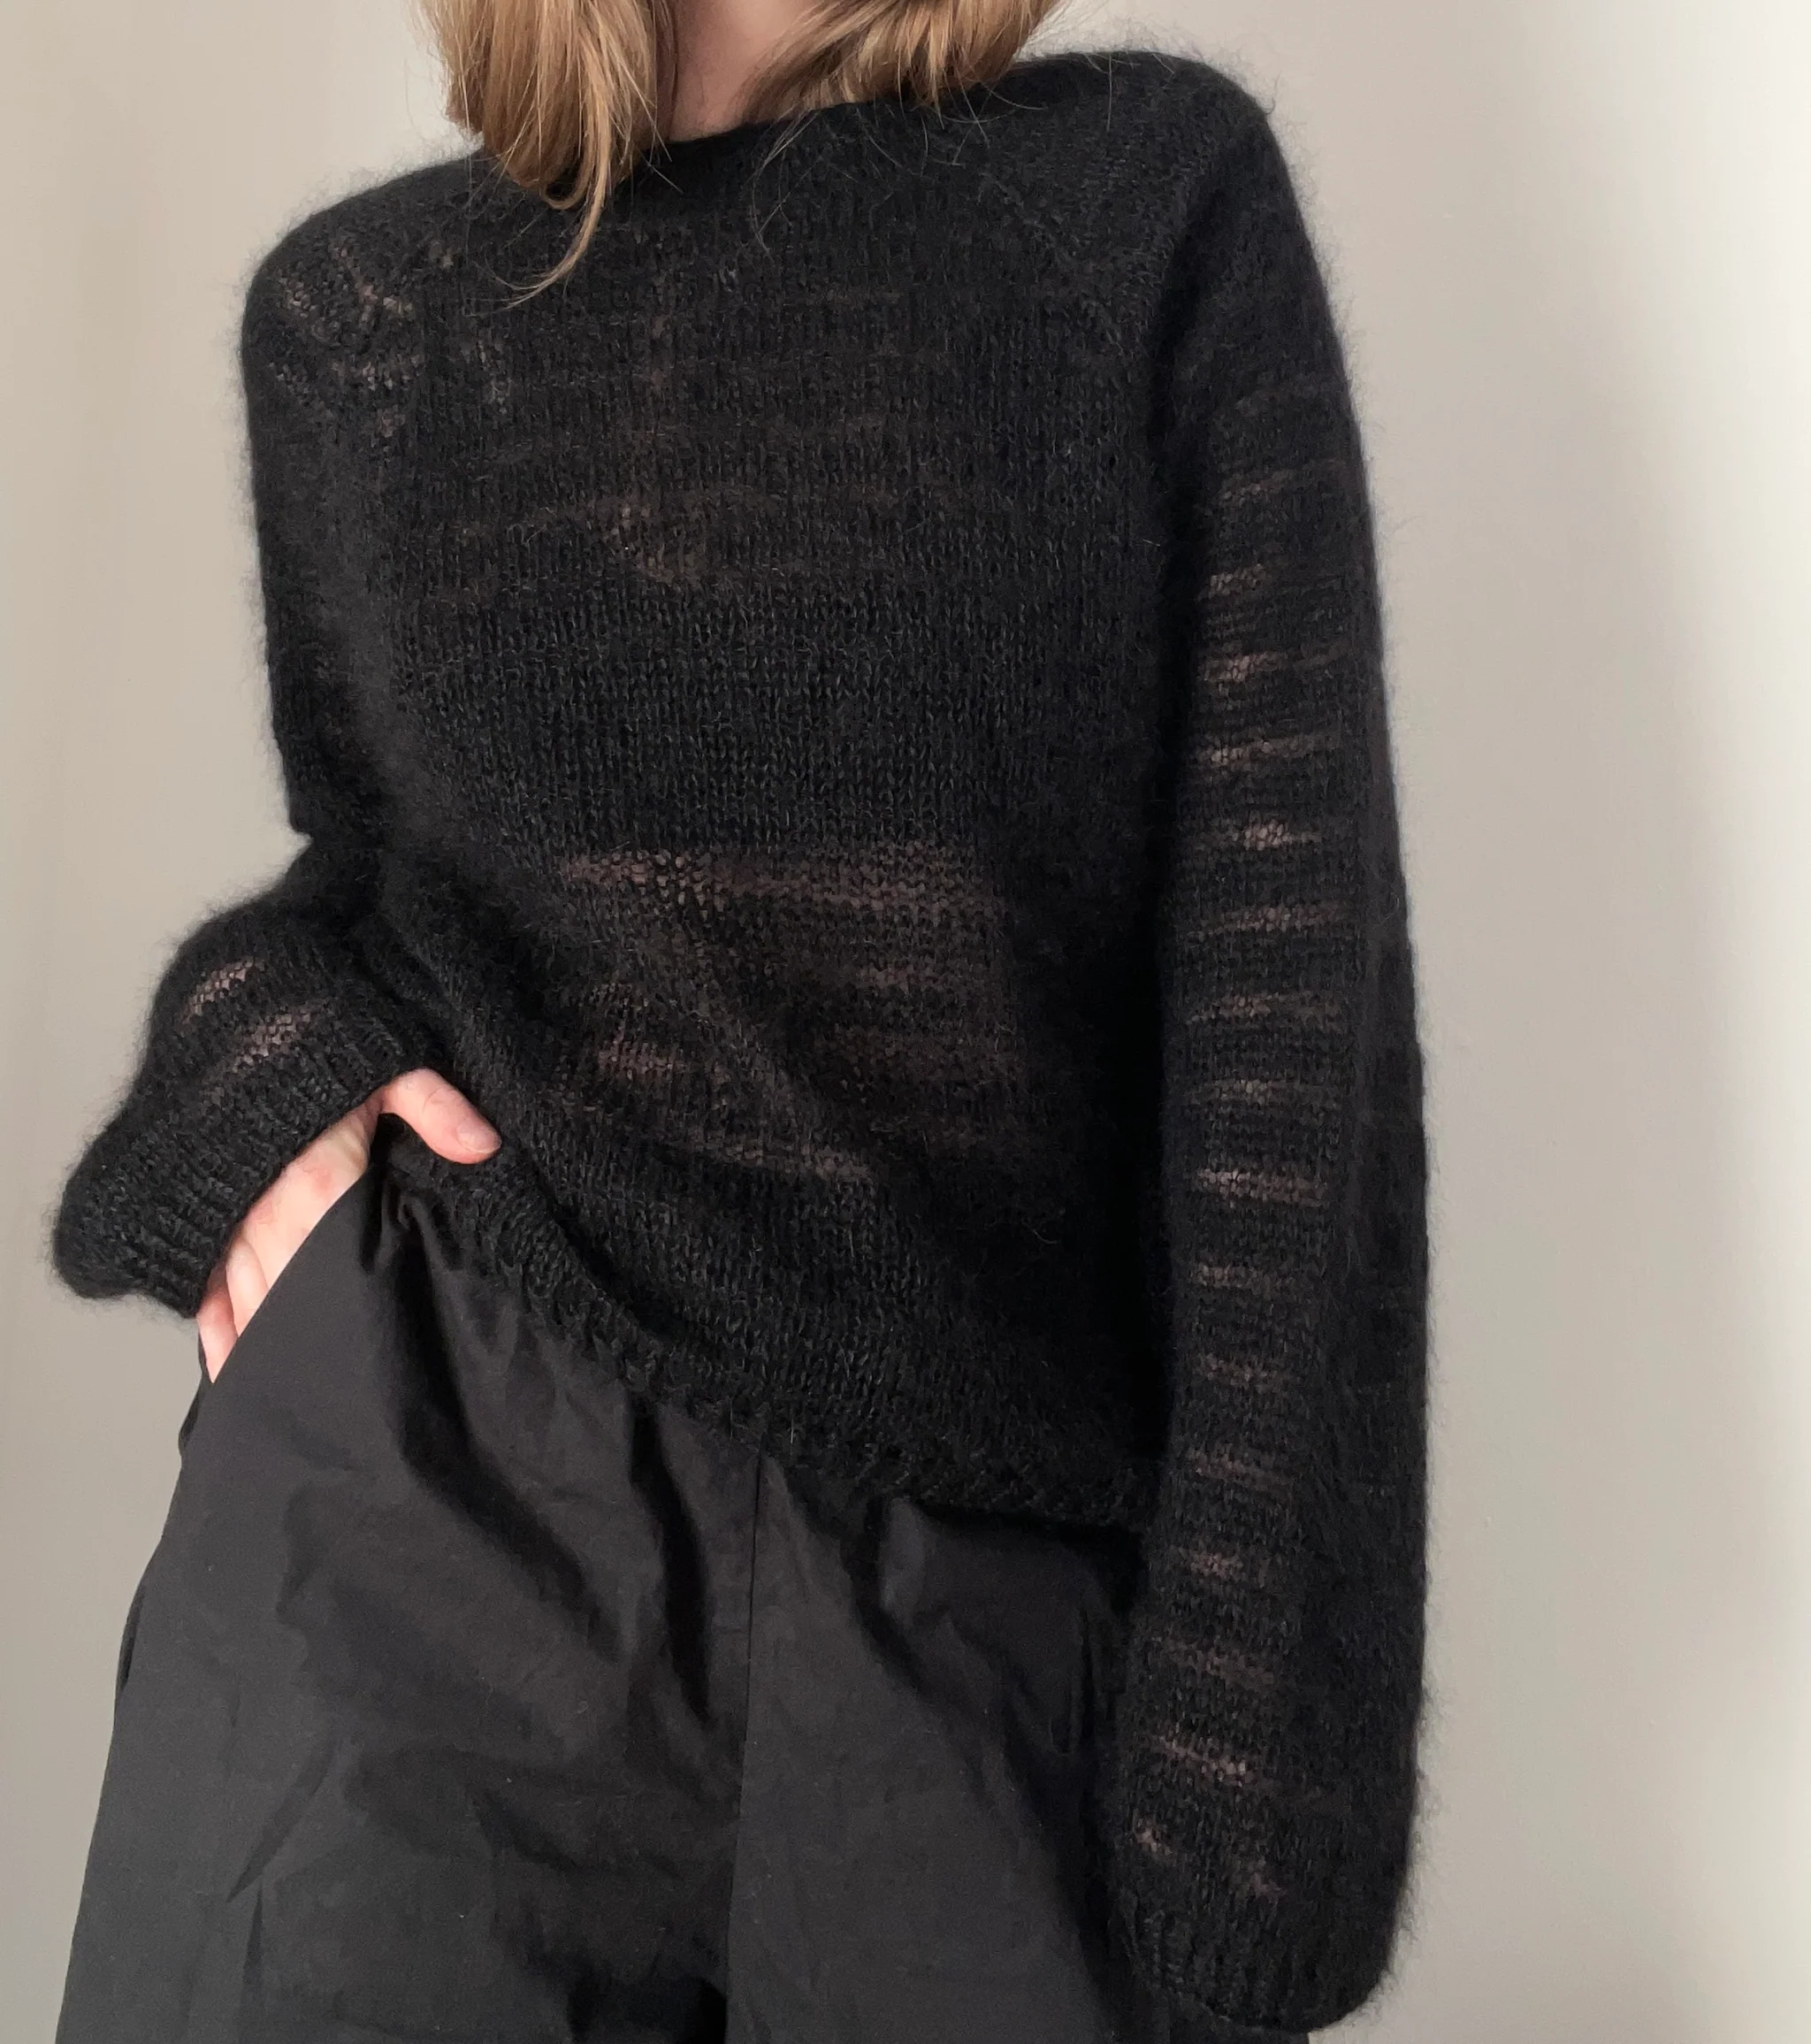 Strickset | Sook Moon Sweater